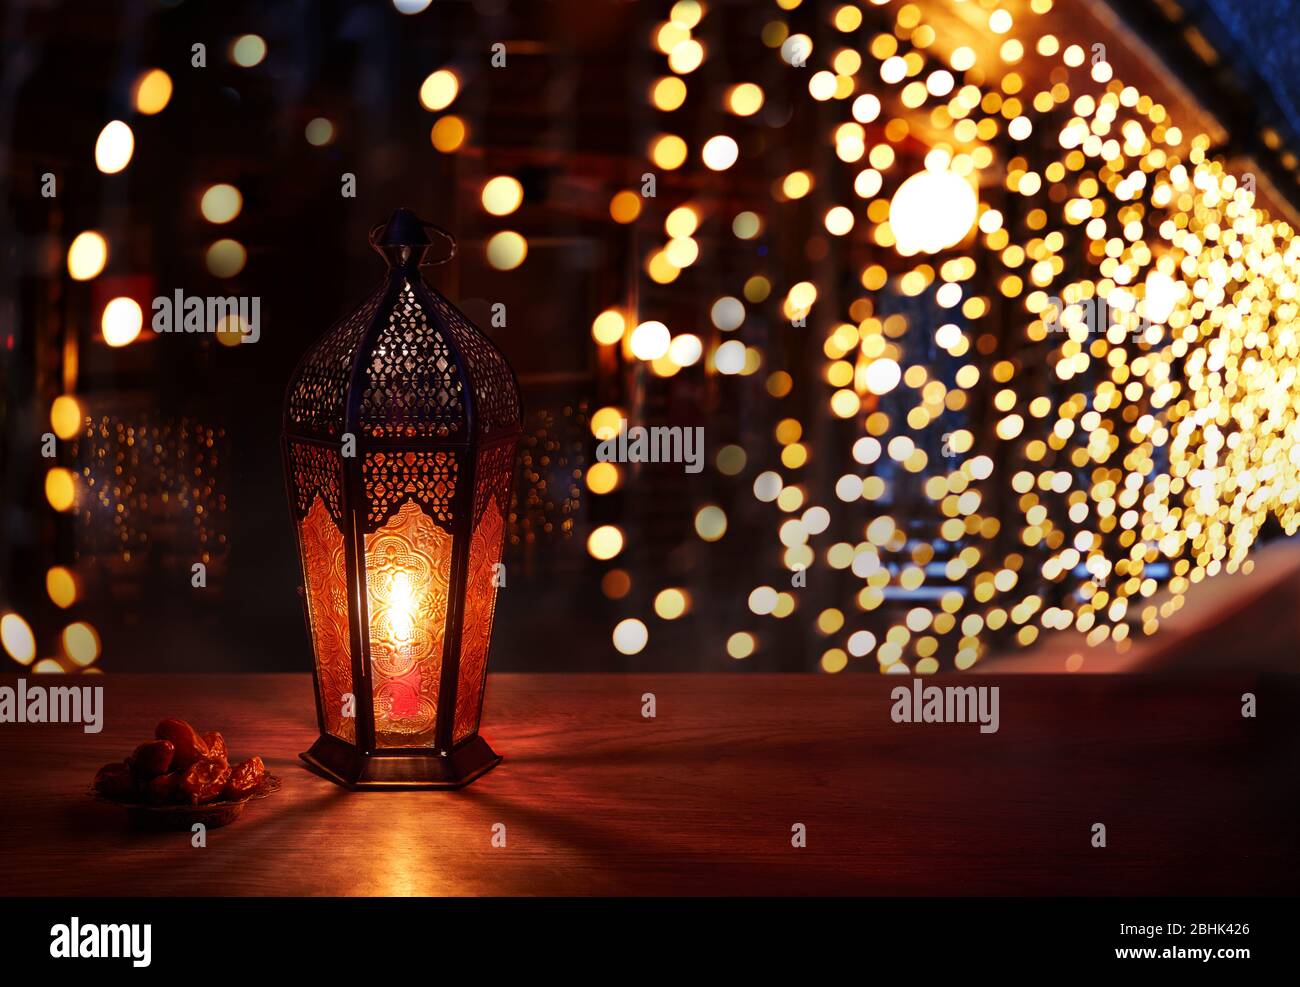 Ramadan lamp hi-res stock photography and images - Alamy